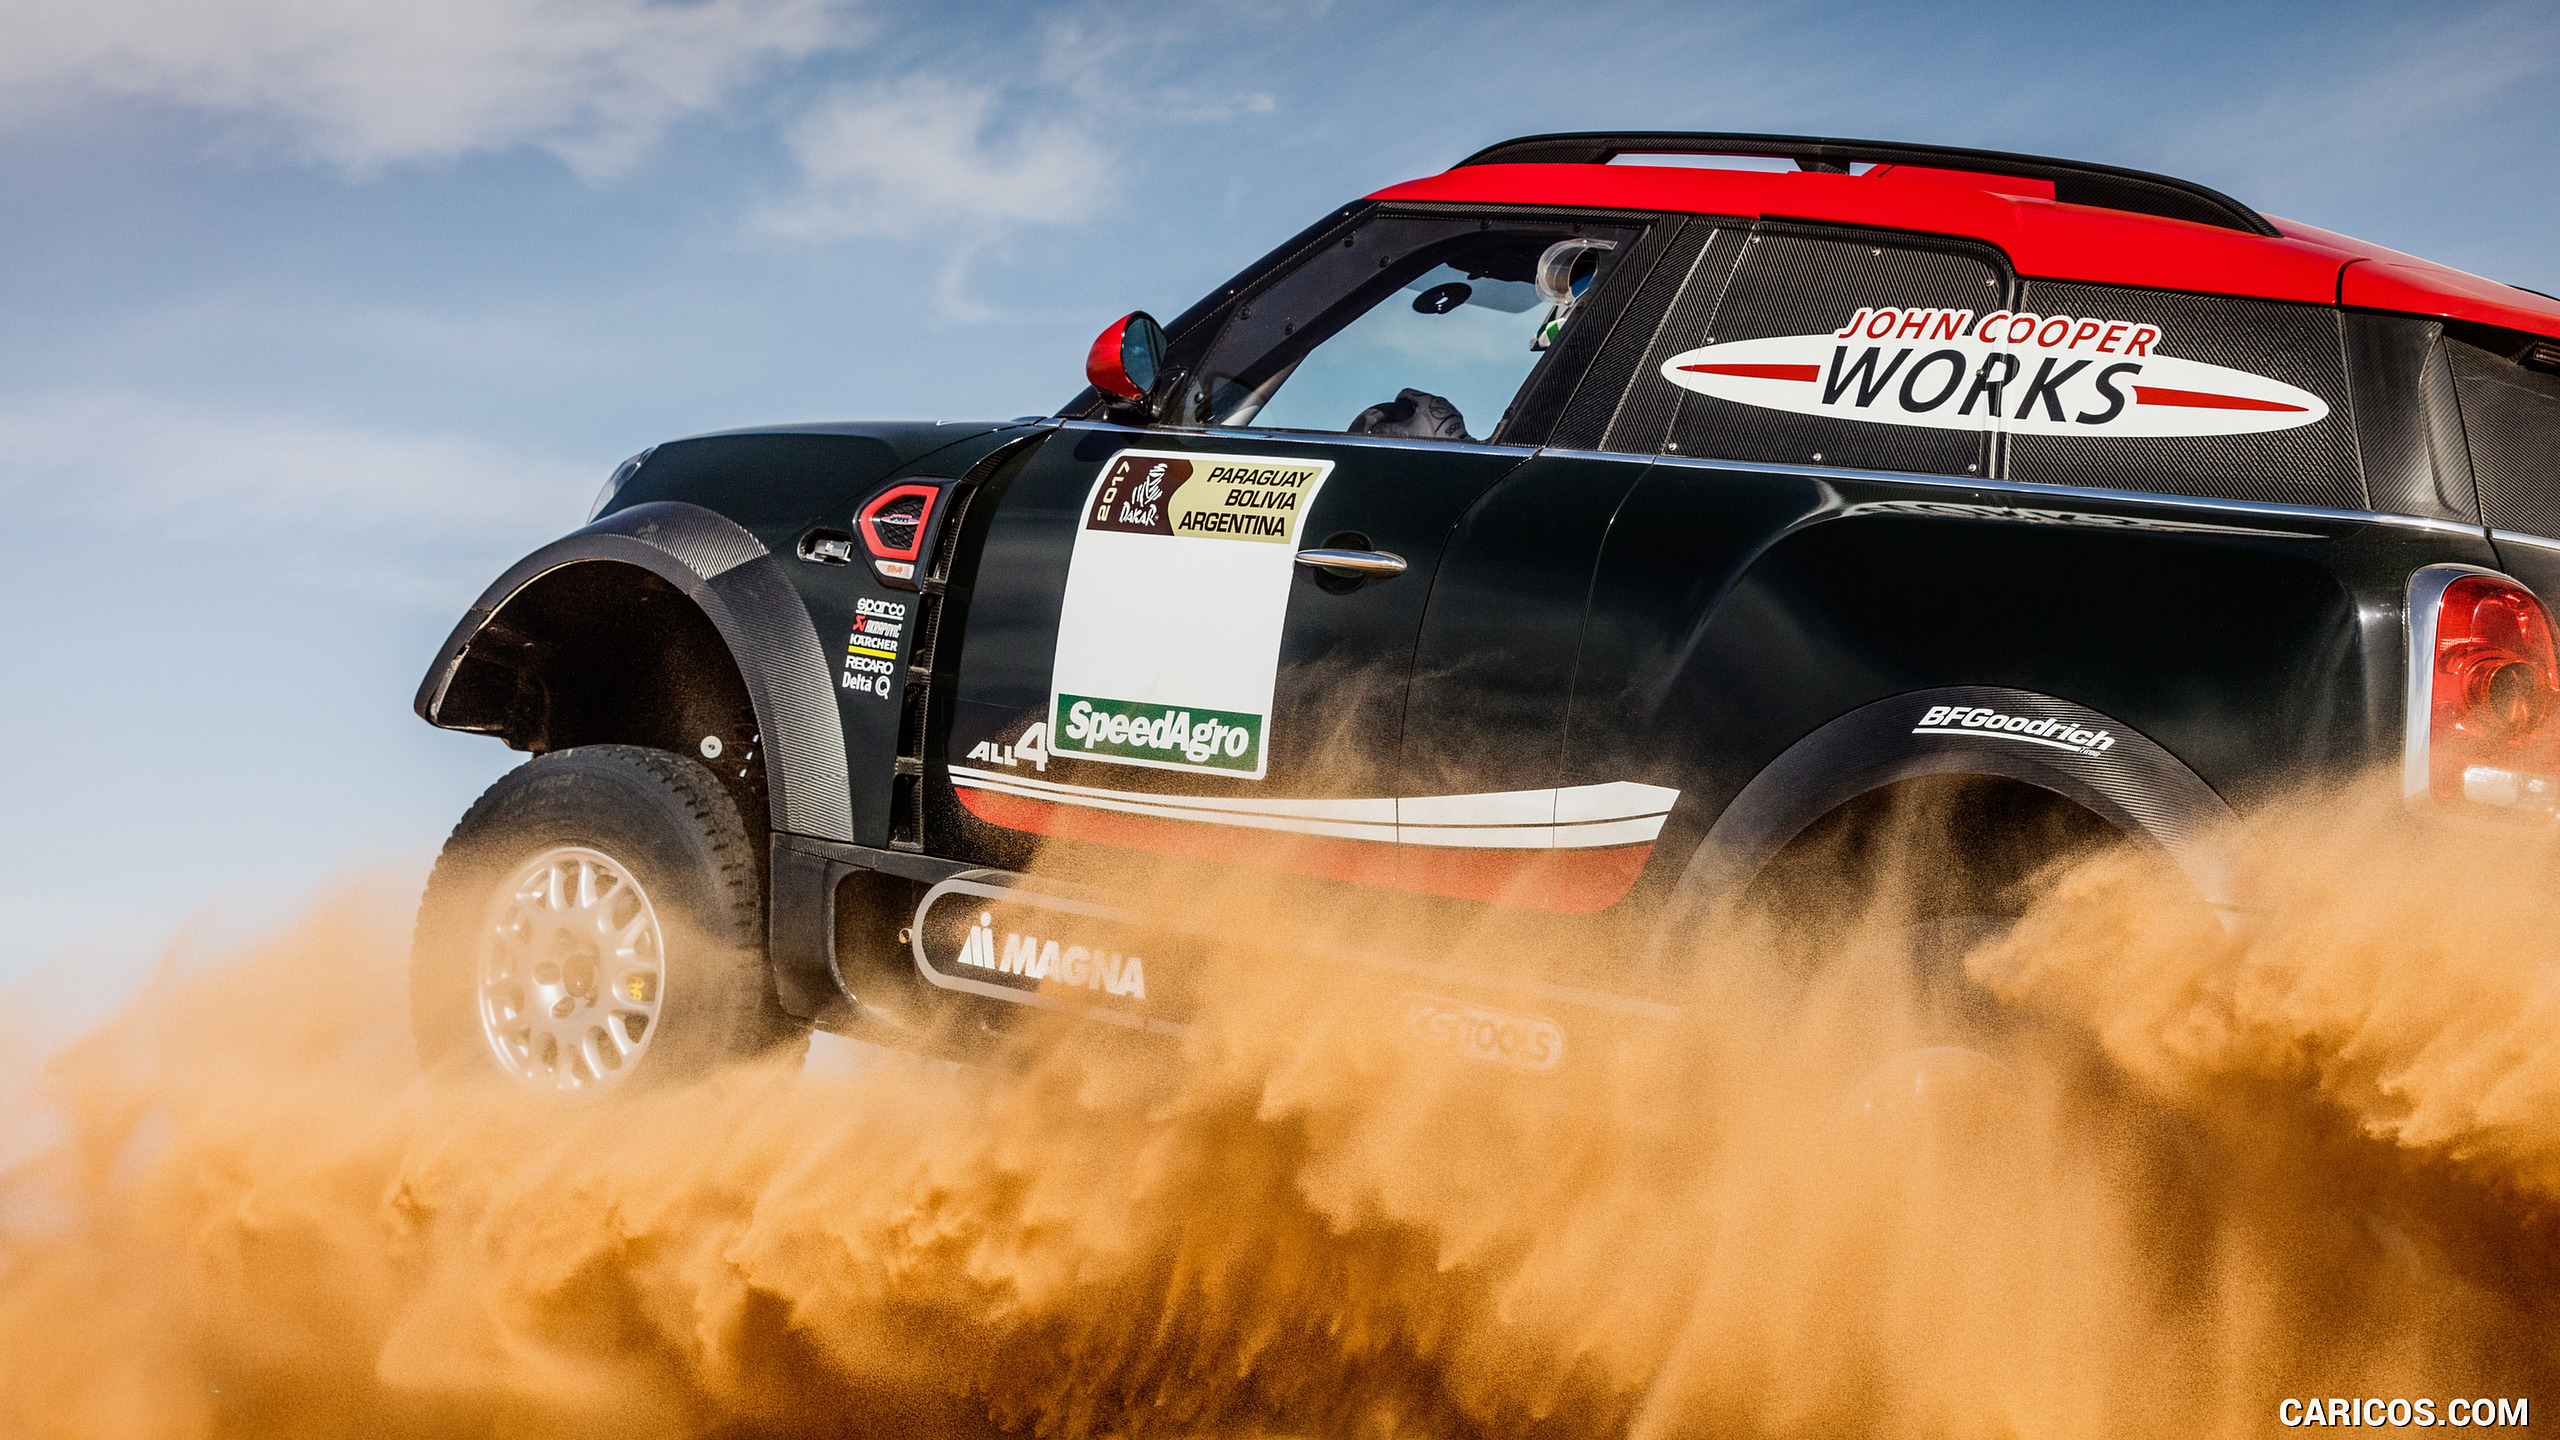 2017 MINI Countryman John Cooper Works Rally - In a Desert - Side, #5 of 58